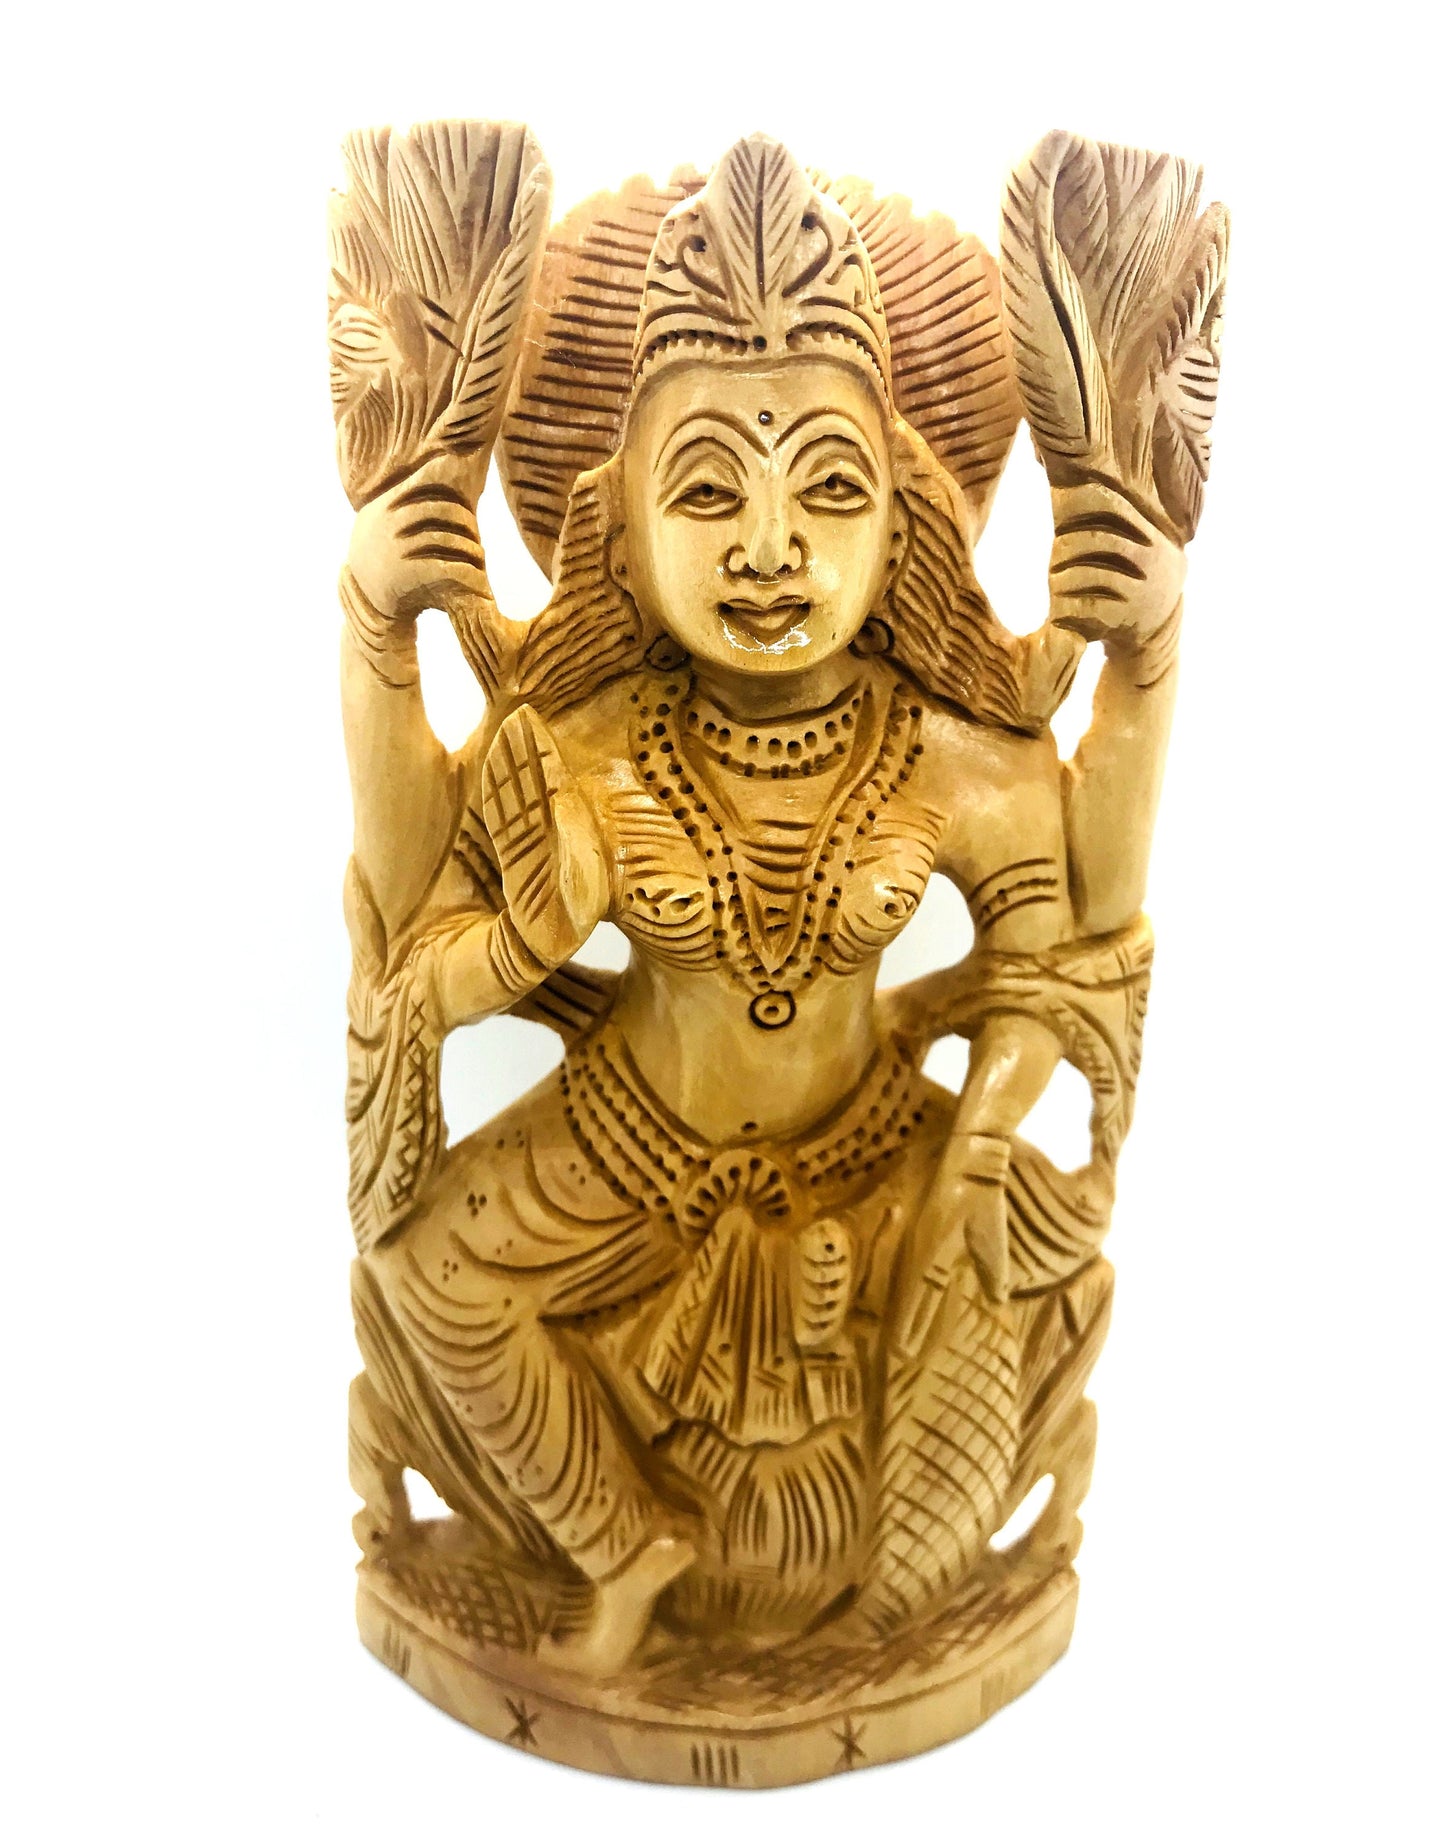 LAXMI Wooden 6" Beautiful Statue Hindu Goddess Pooja Prayer Rare Hand Carved, Intricately Detailed Statues, Laxmi Meditation Decor, Yoga